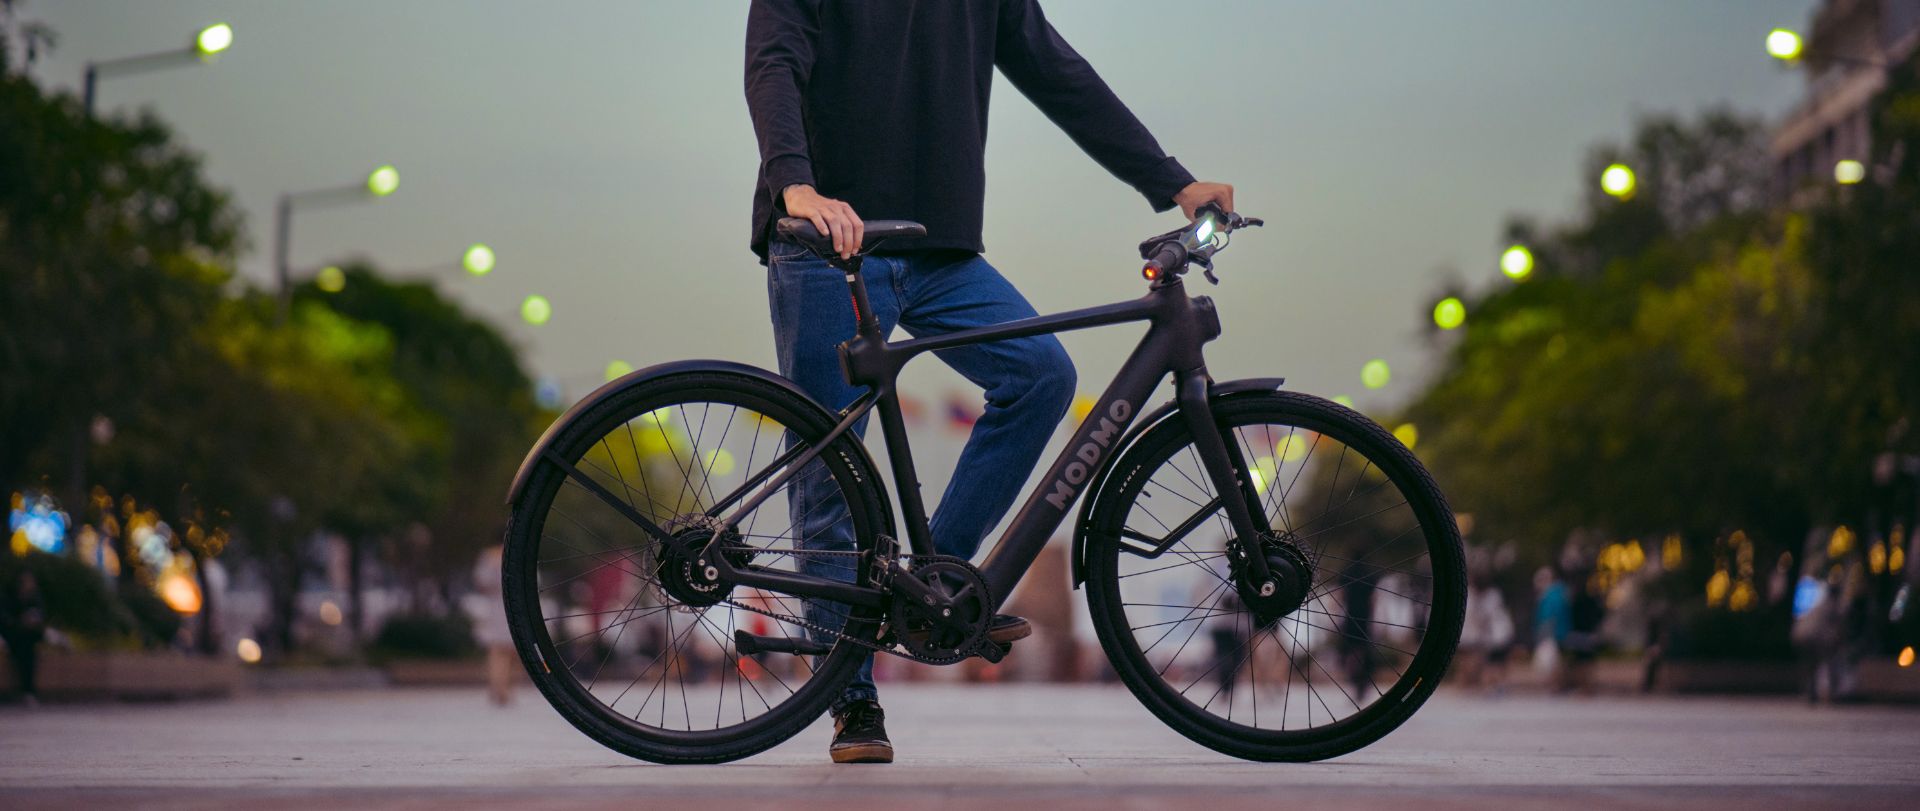 Modmo Saigon+ Electric Bicycle - RRP £2800 - Size M (Rider: 155-175cm) - Bild 16 aus 16